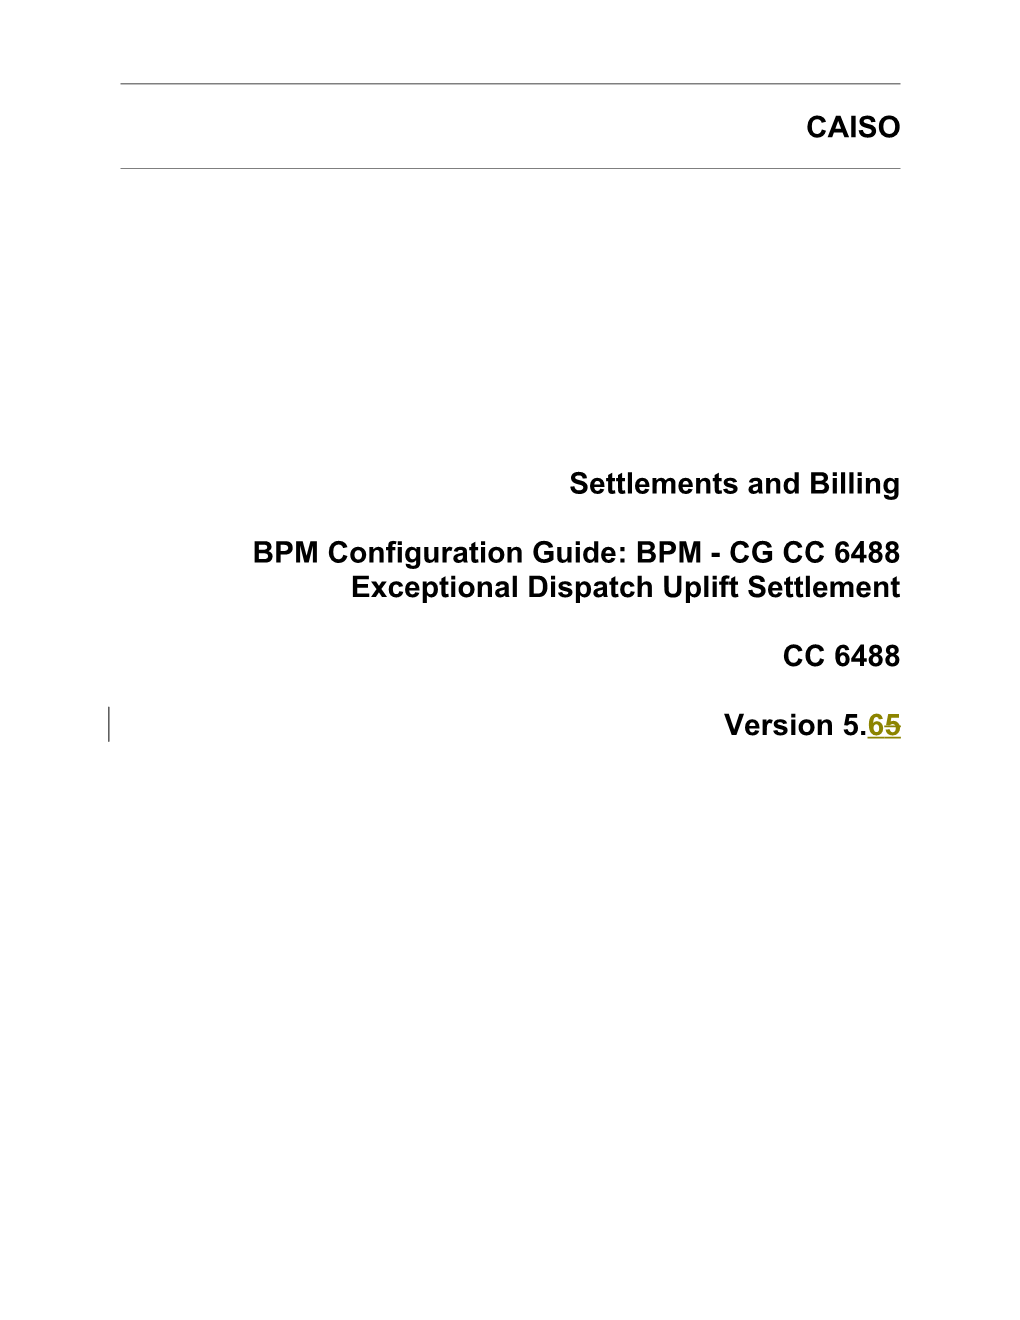 BPM - CG CC 6488 Exceptional Dispatch Uplift Settlement